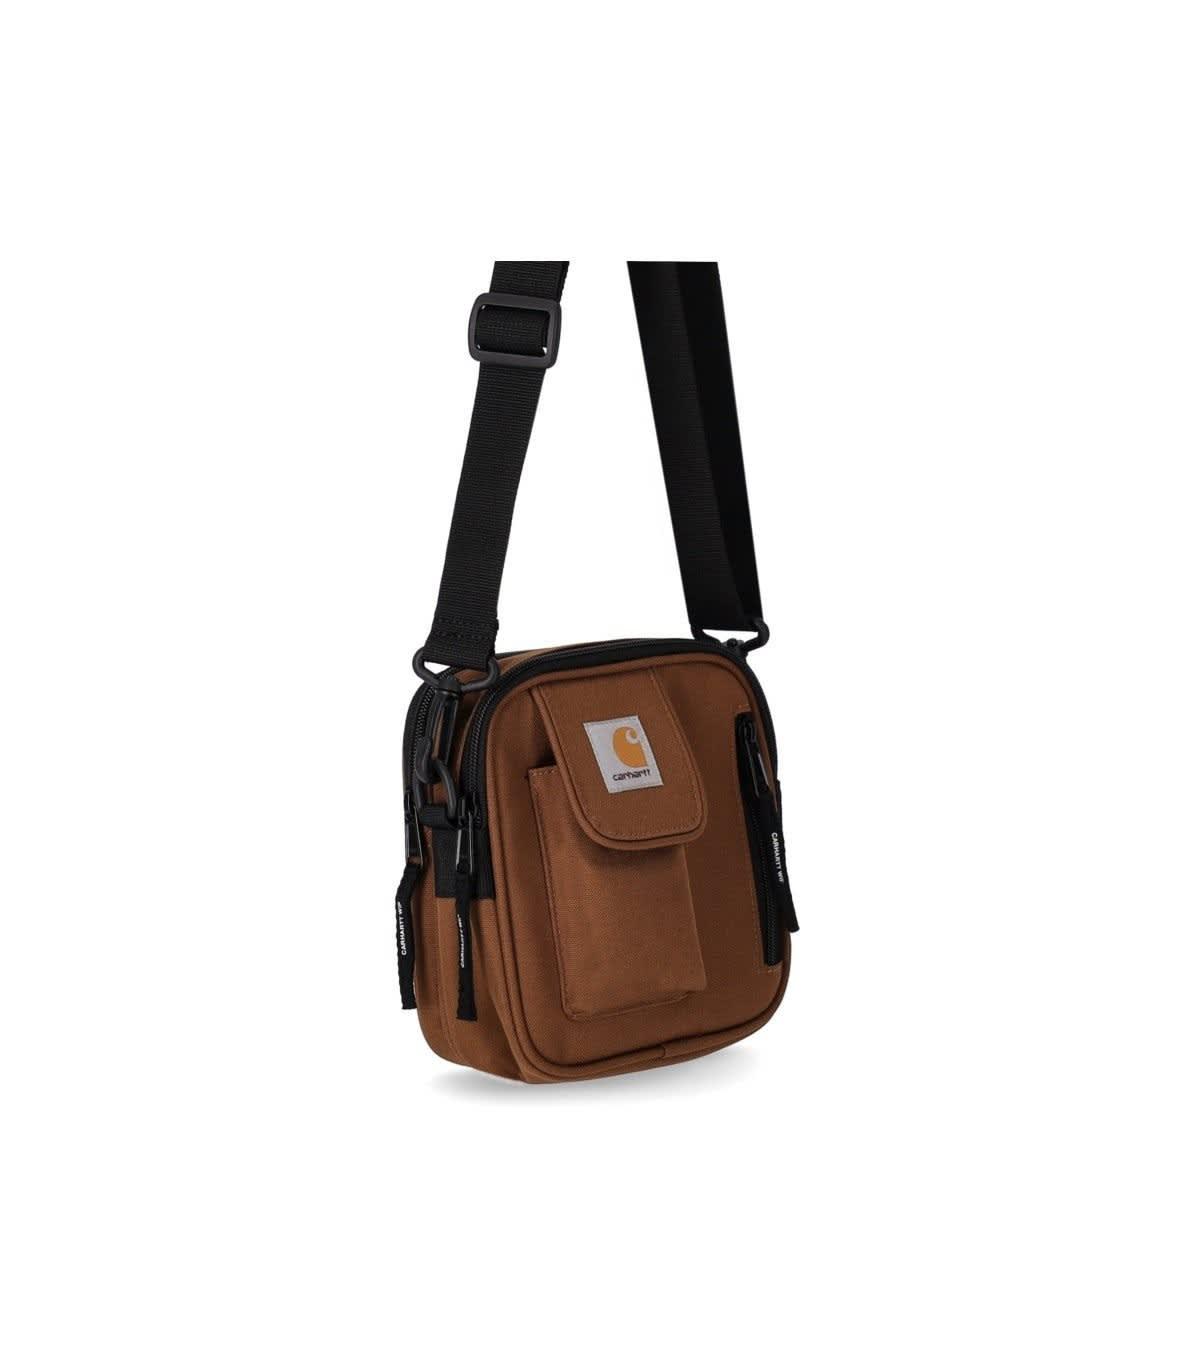 CARHARTT WIP: Carhartt crossbody bag with logo - Brown  Carhartt Wip  shoulder bag I006285 online at